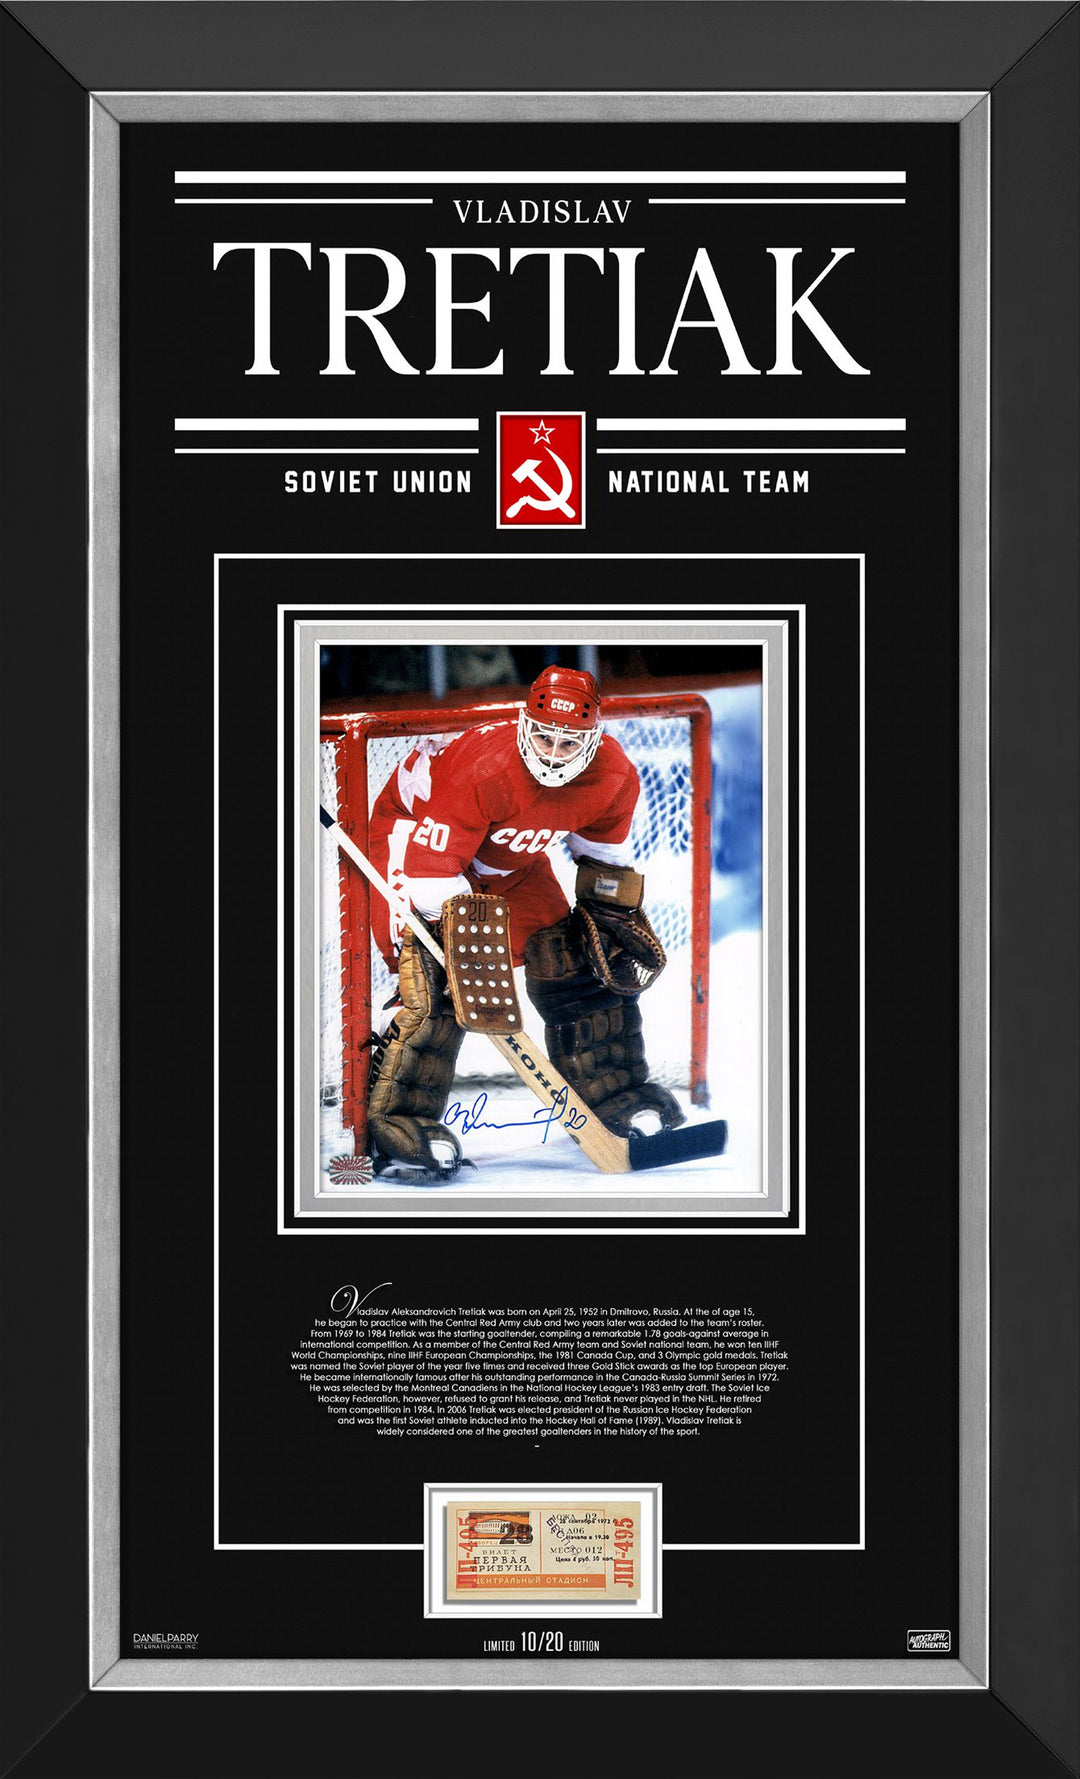 Vladislav Tretiak Signed Photo Ltd Ed Of 20 1972 Summit Series Replica Ticket, CCCP, NHL, Hockey, Autographed, Signed, AACMH32855